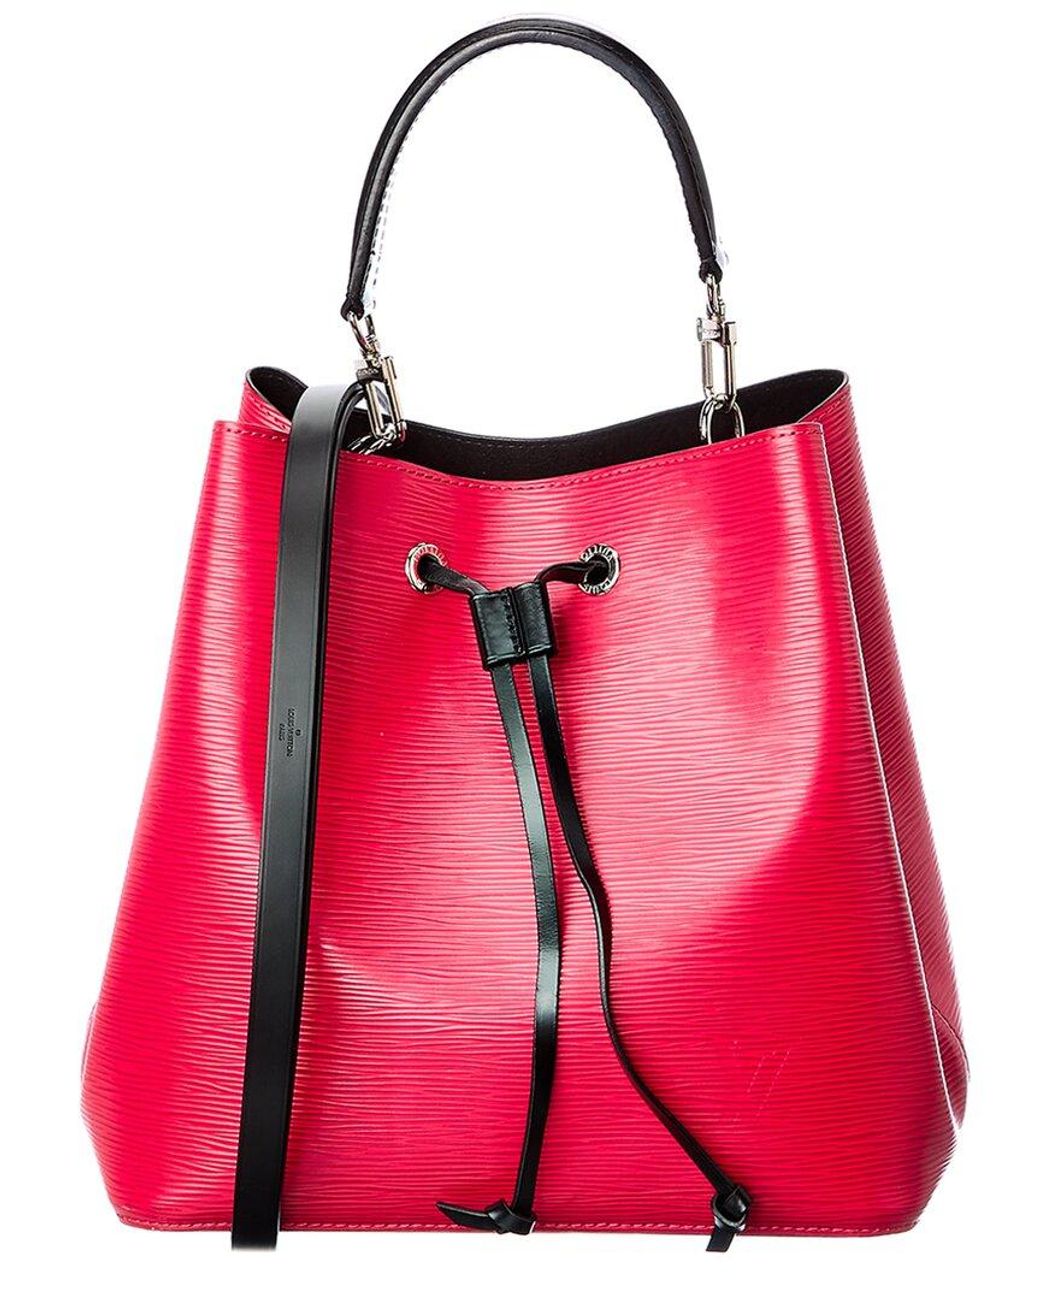 Pre-Owned Louis Vuitton Passy PM Epi Tote Bag - Excellent Condition 